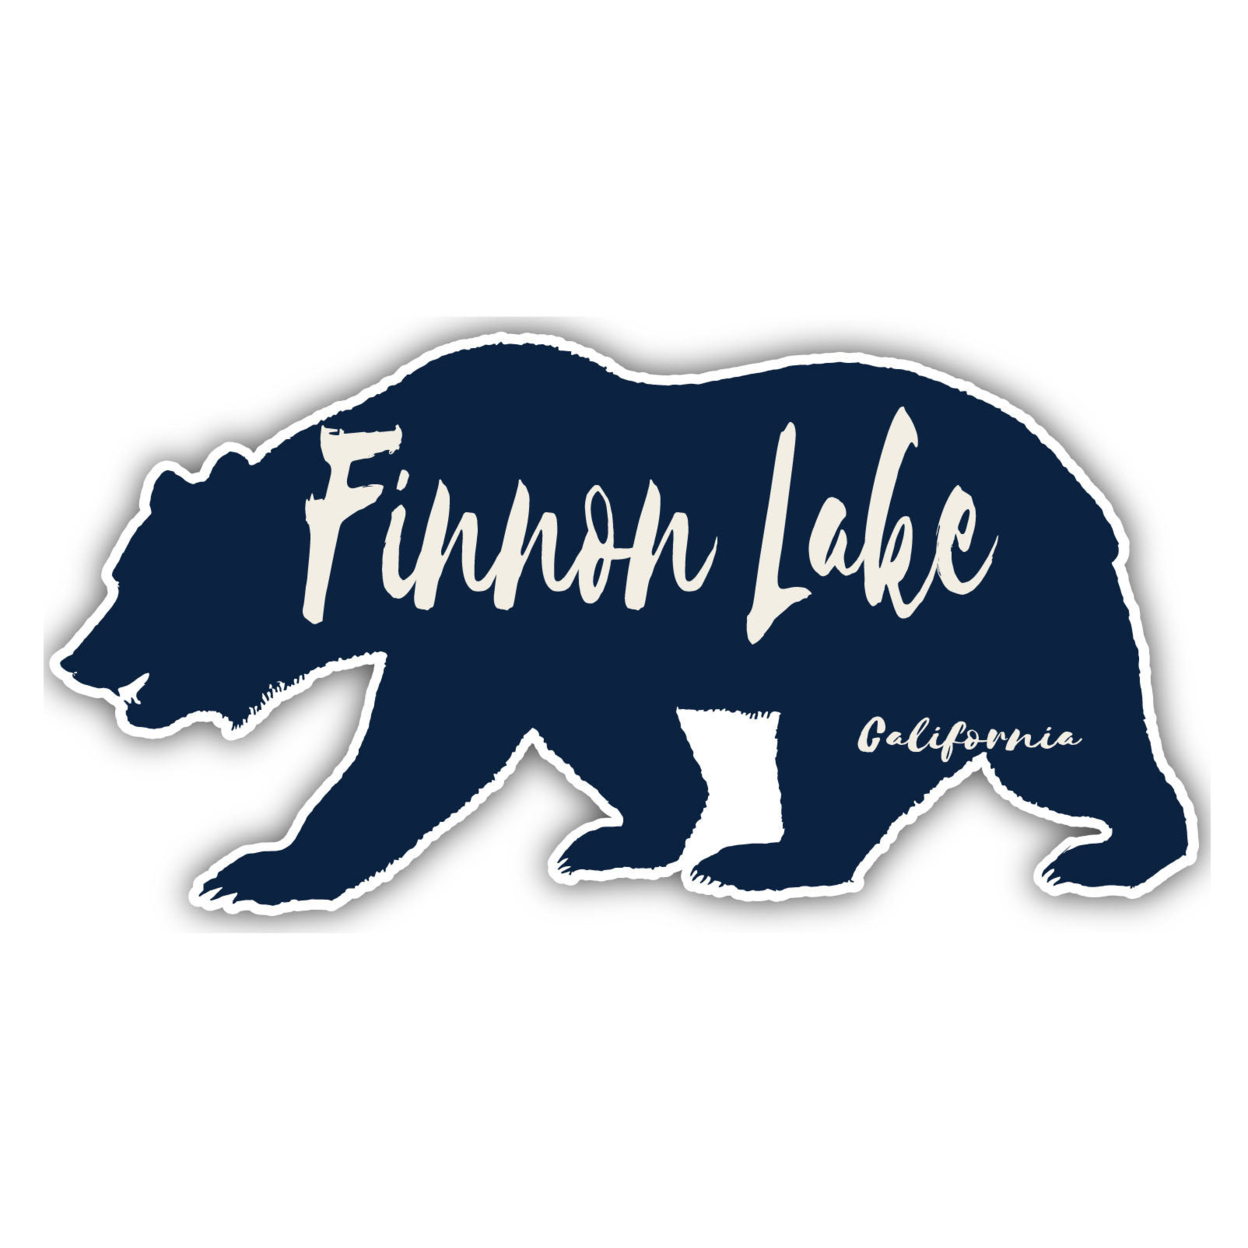 Finnon Lake California Souvenir Decorative Stickers (Choose Theme And Size) - 4-Pack, 6-Inch, Bear